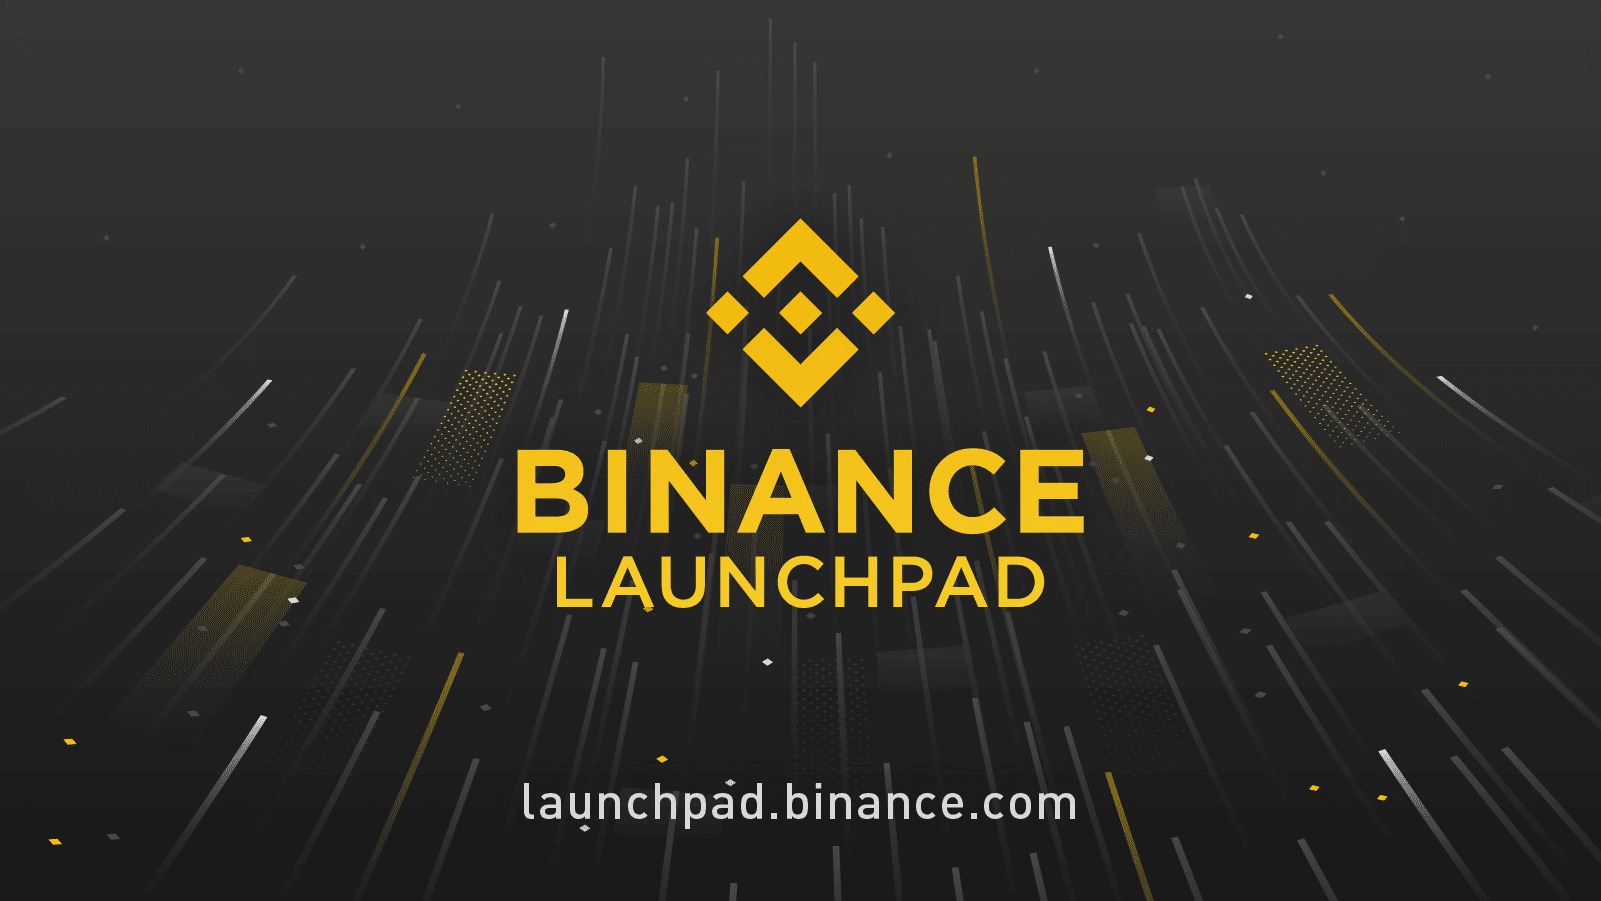 Binance Launchpad